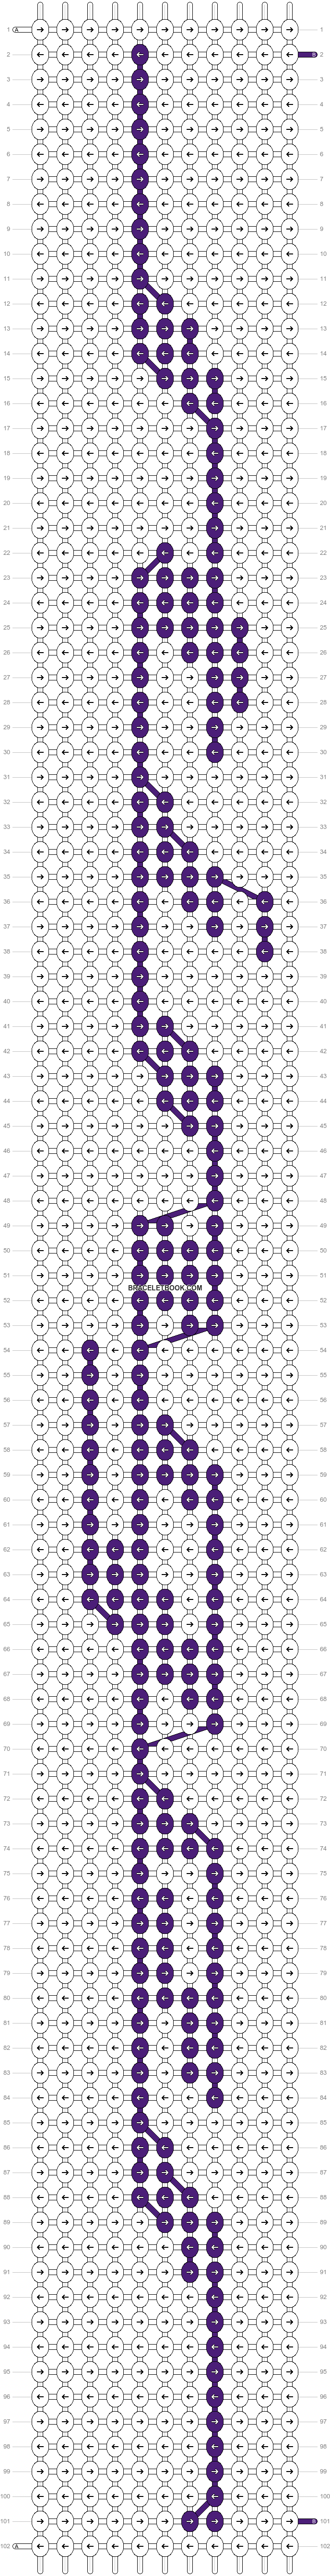 Alpha pattern #45363 pattern